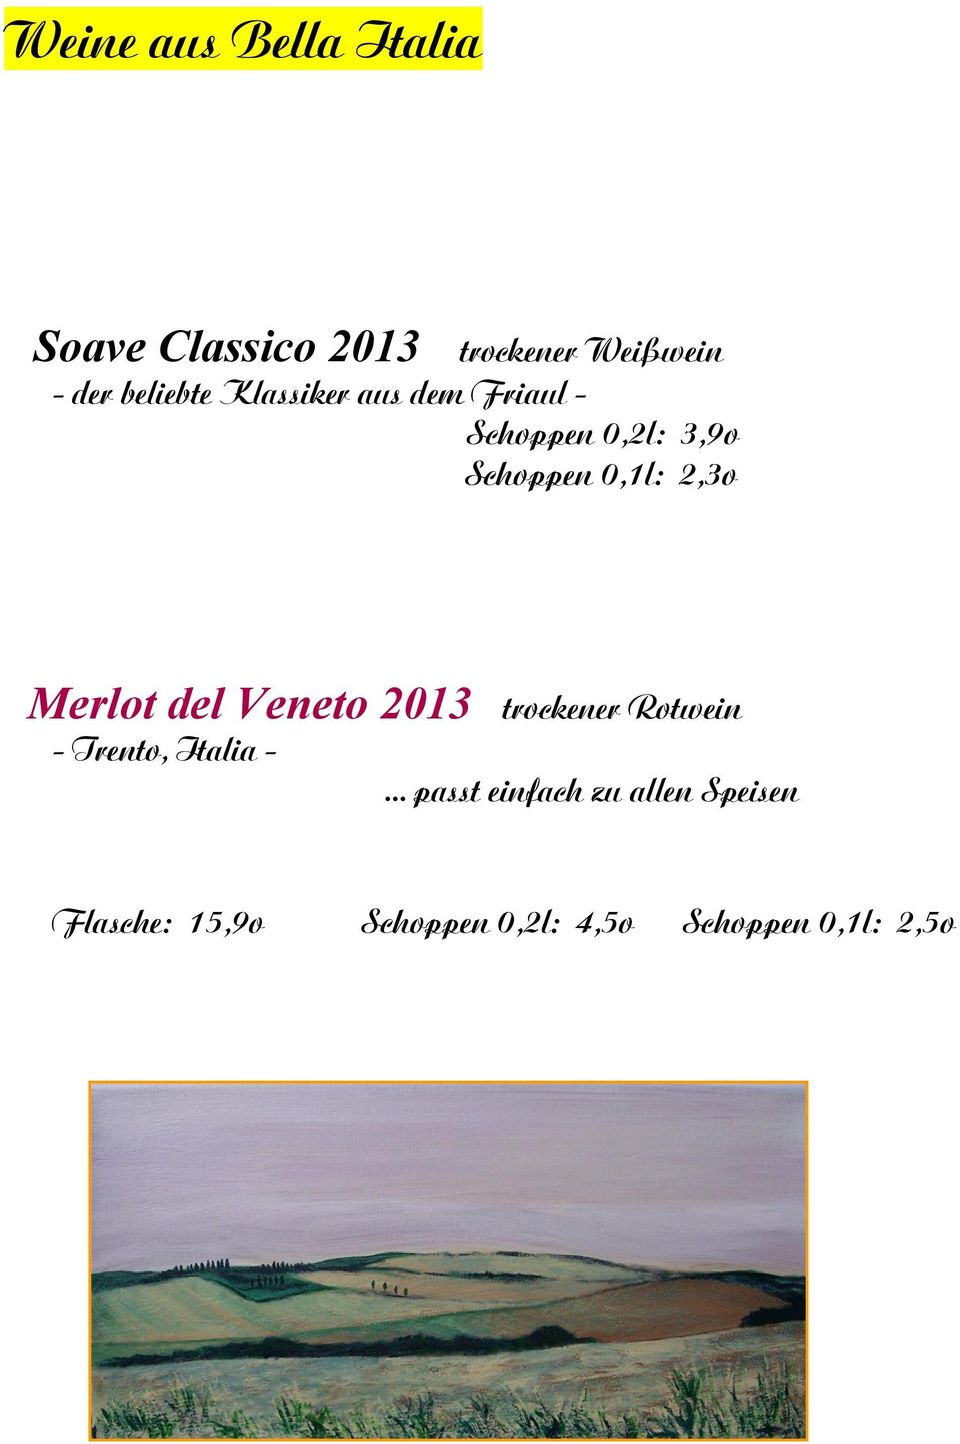 2,3o Merlot del Veneto 2013 trockener Rotwein - Trento, Italia -.